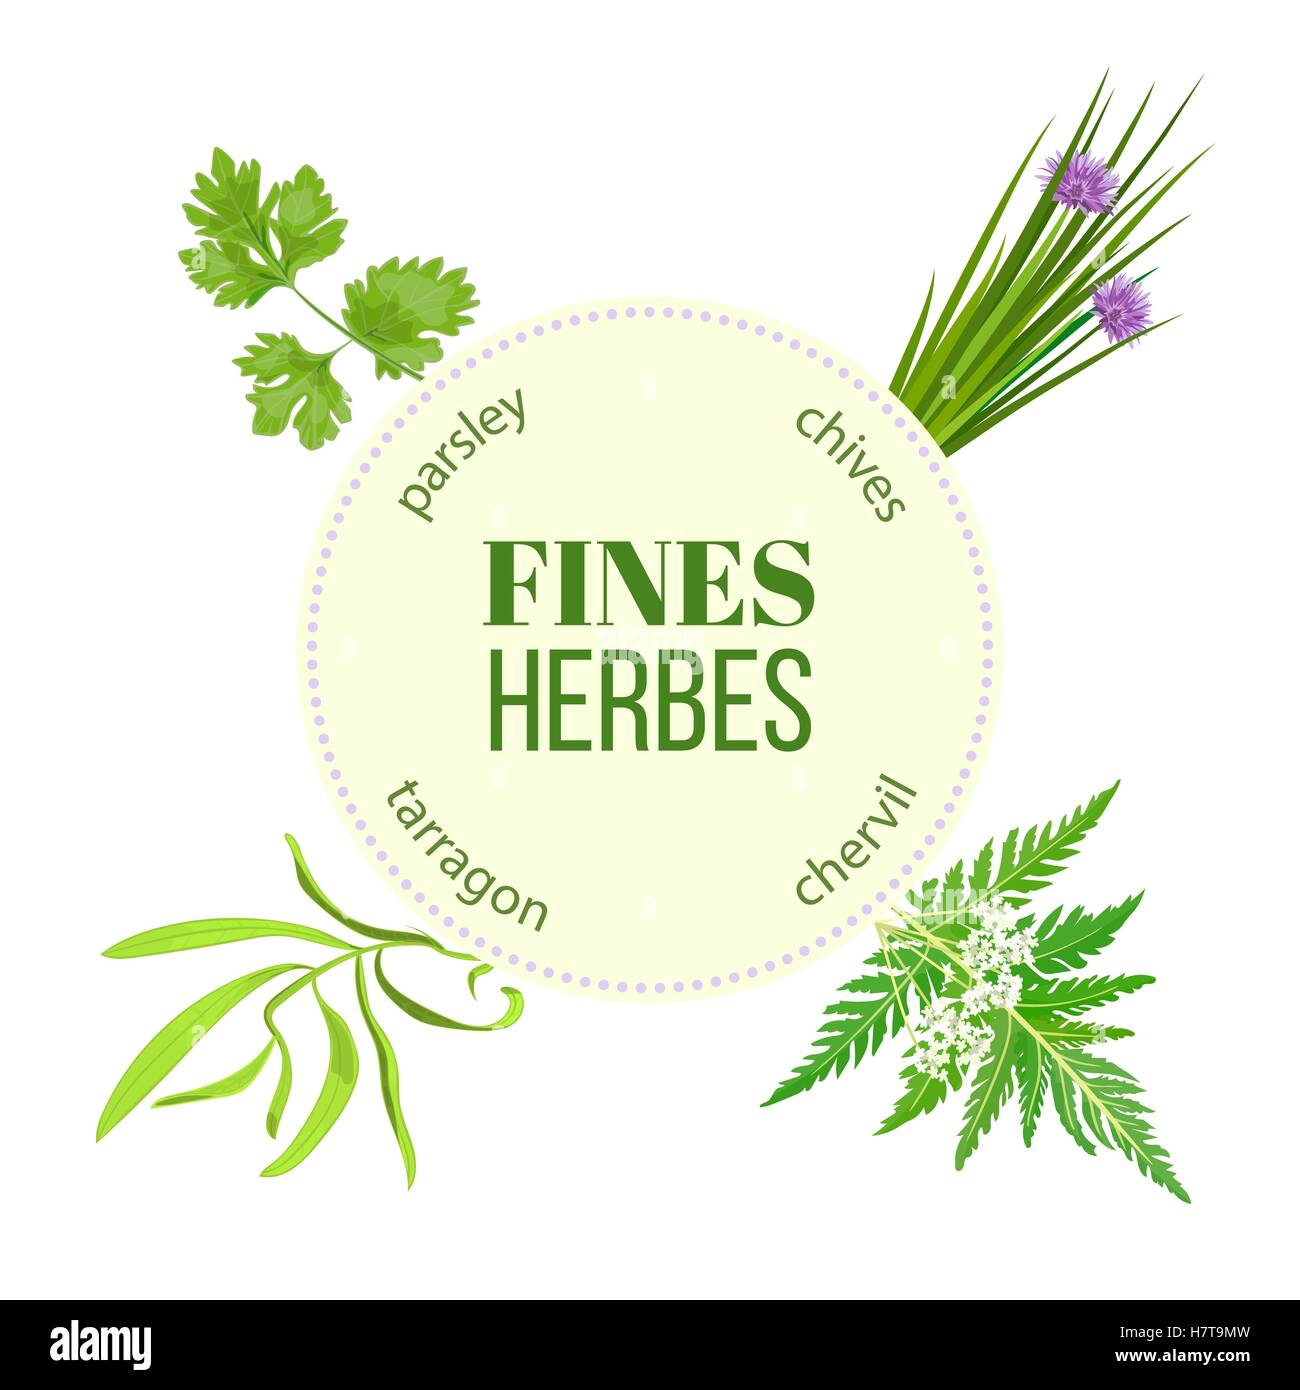 Fines herbes round emblem Stock Vector